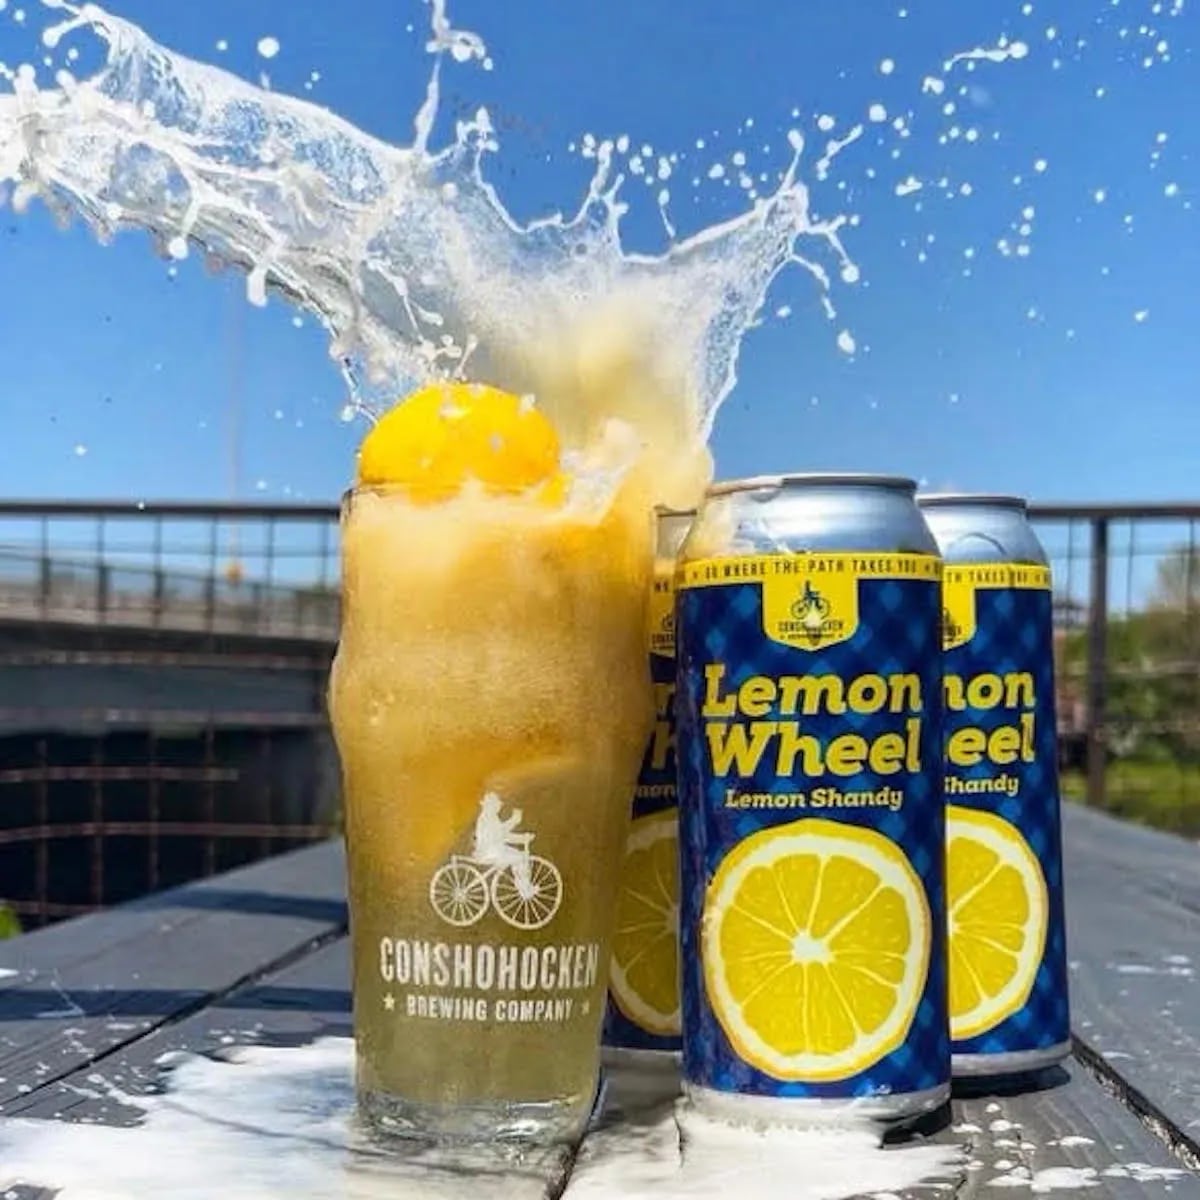 Lemon Wheel lemon shandy beer from Conshohocken Brewing Company.